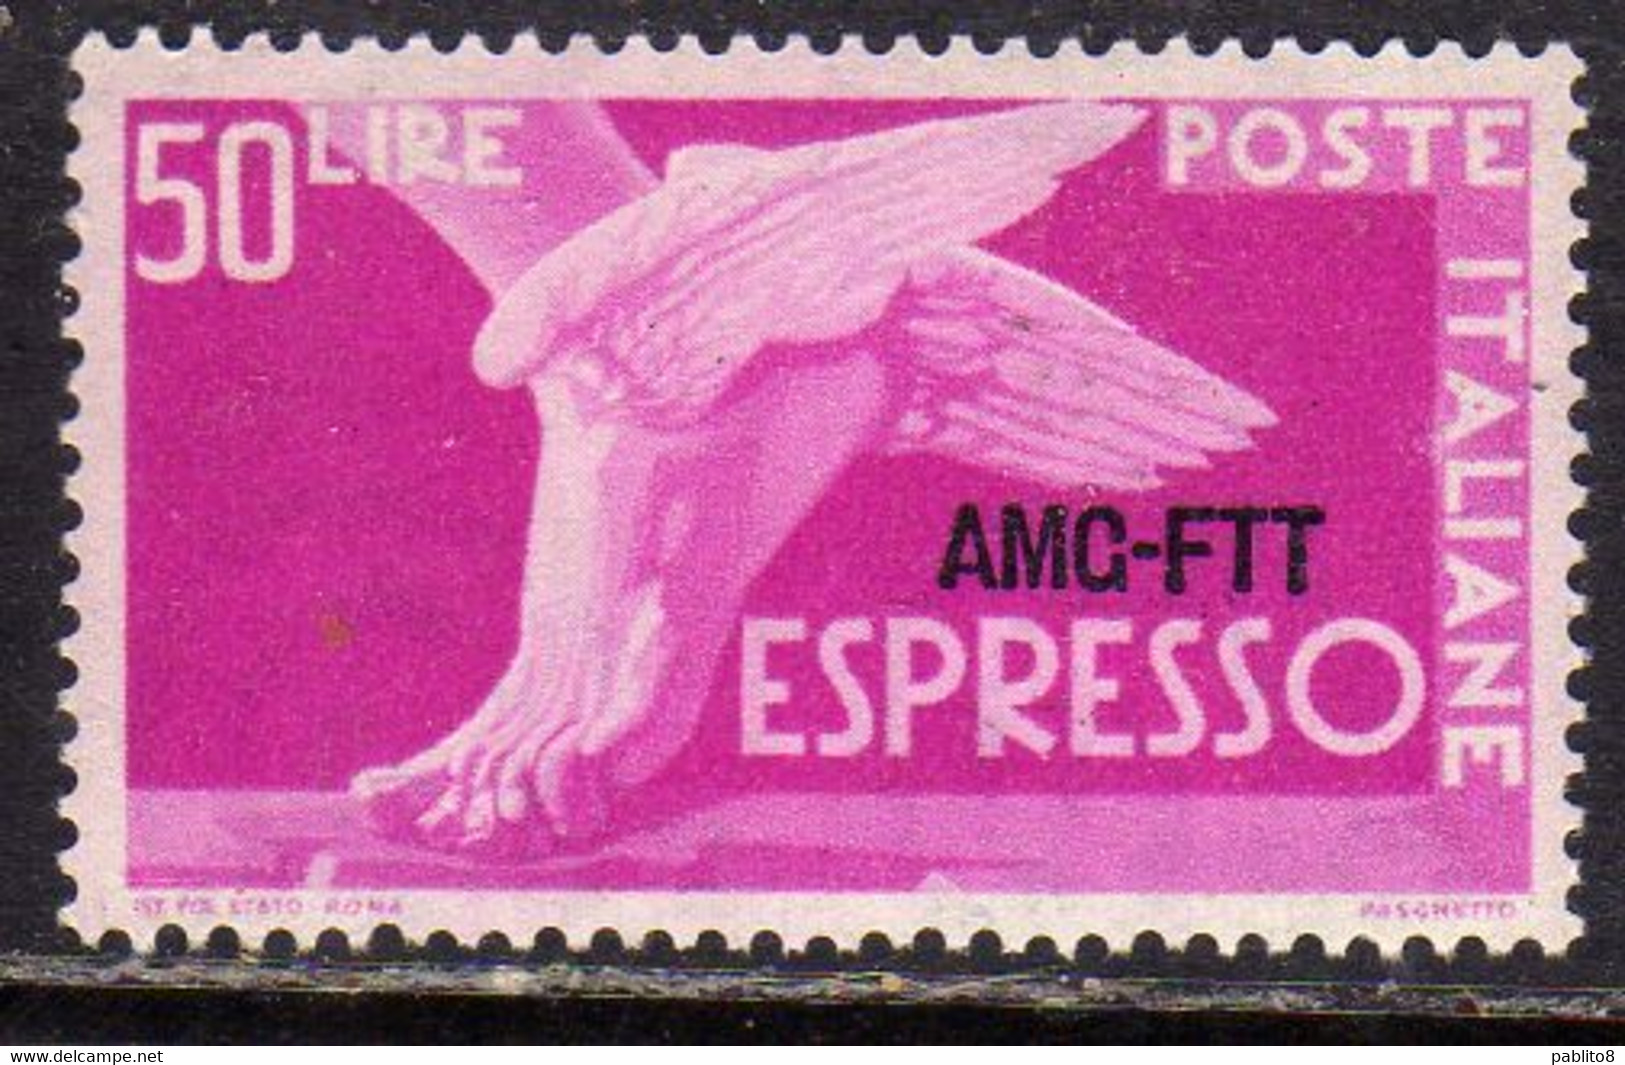 TRIESTE A 1953 AMG-FTT OVERPRINTED ESPRESSO SPECIAL DELIVERY LIRE 50 RUOTA III MNH BEN CENTRATO - Eilsendung (Eilpost)